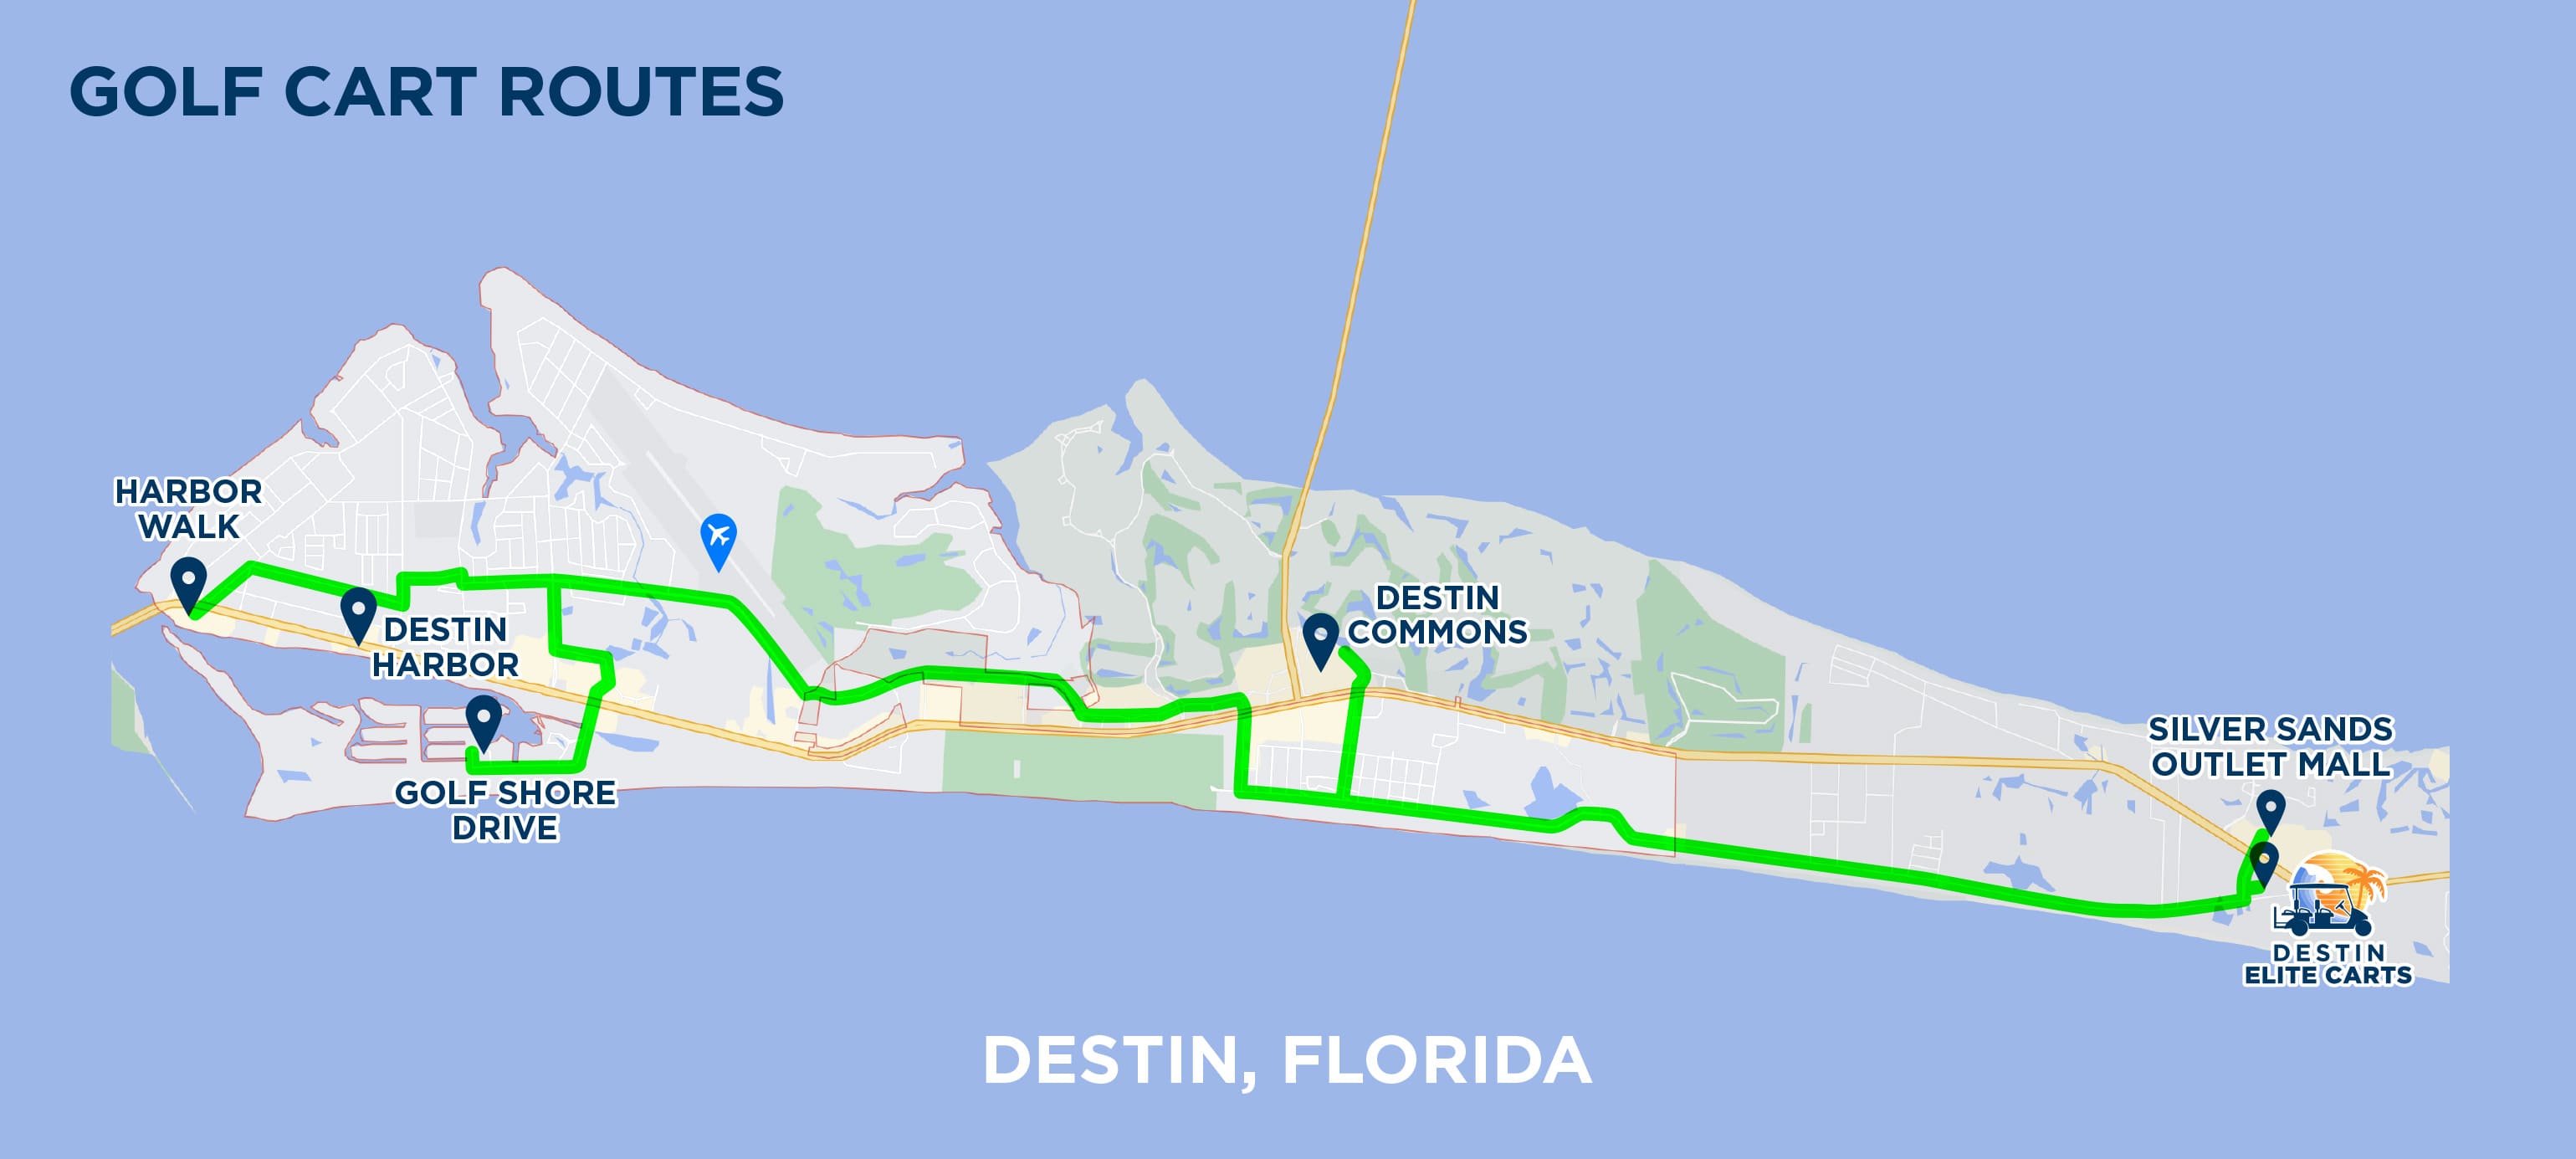 Destin Elite Carts Golf Cart Routes in Destin Florida